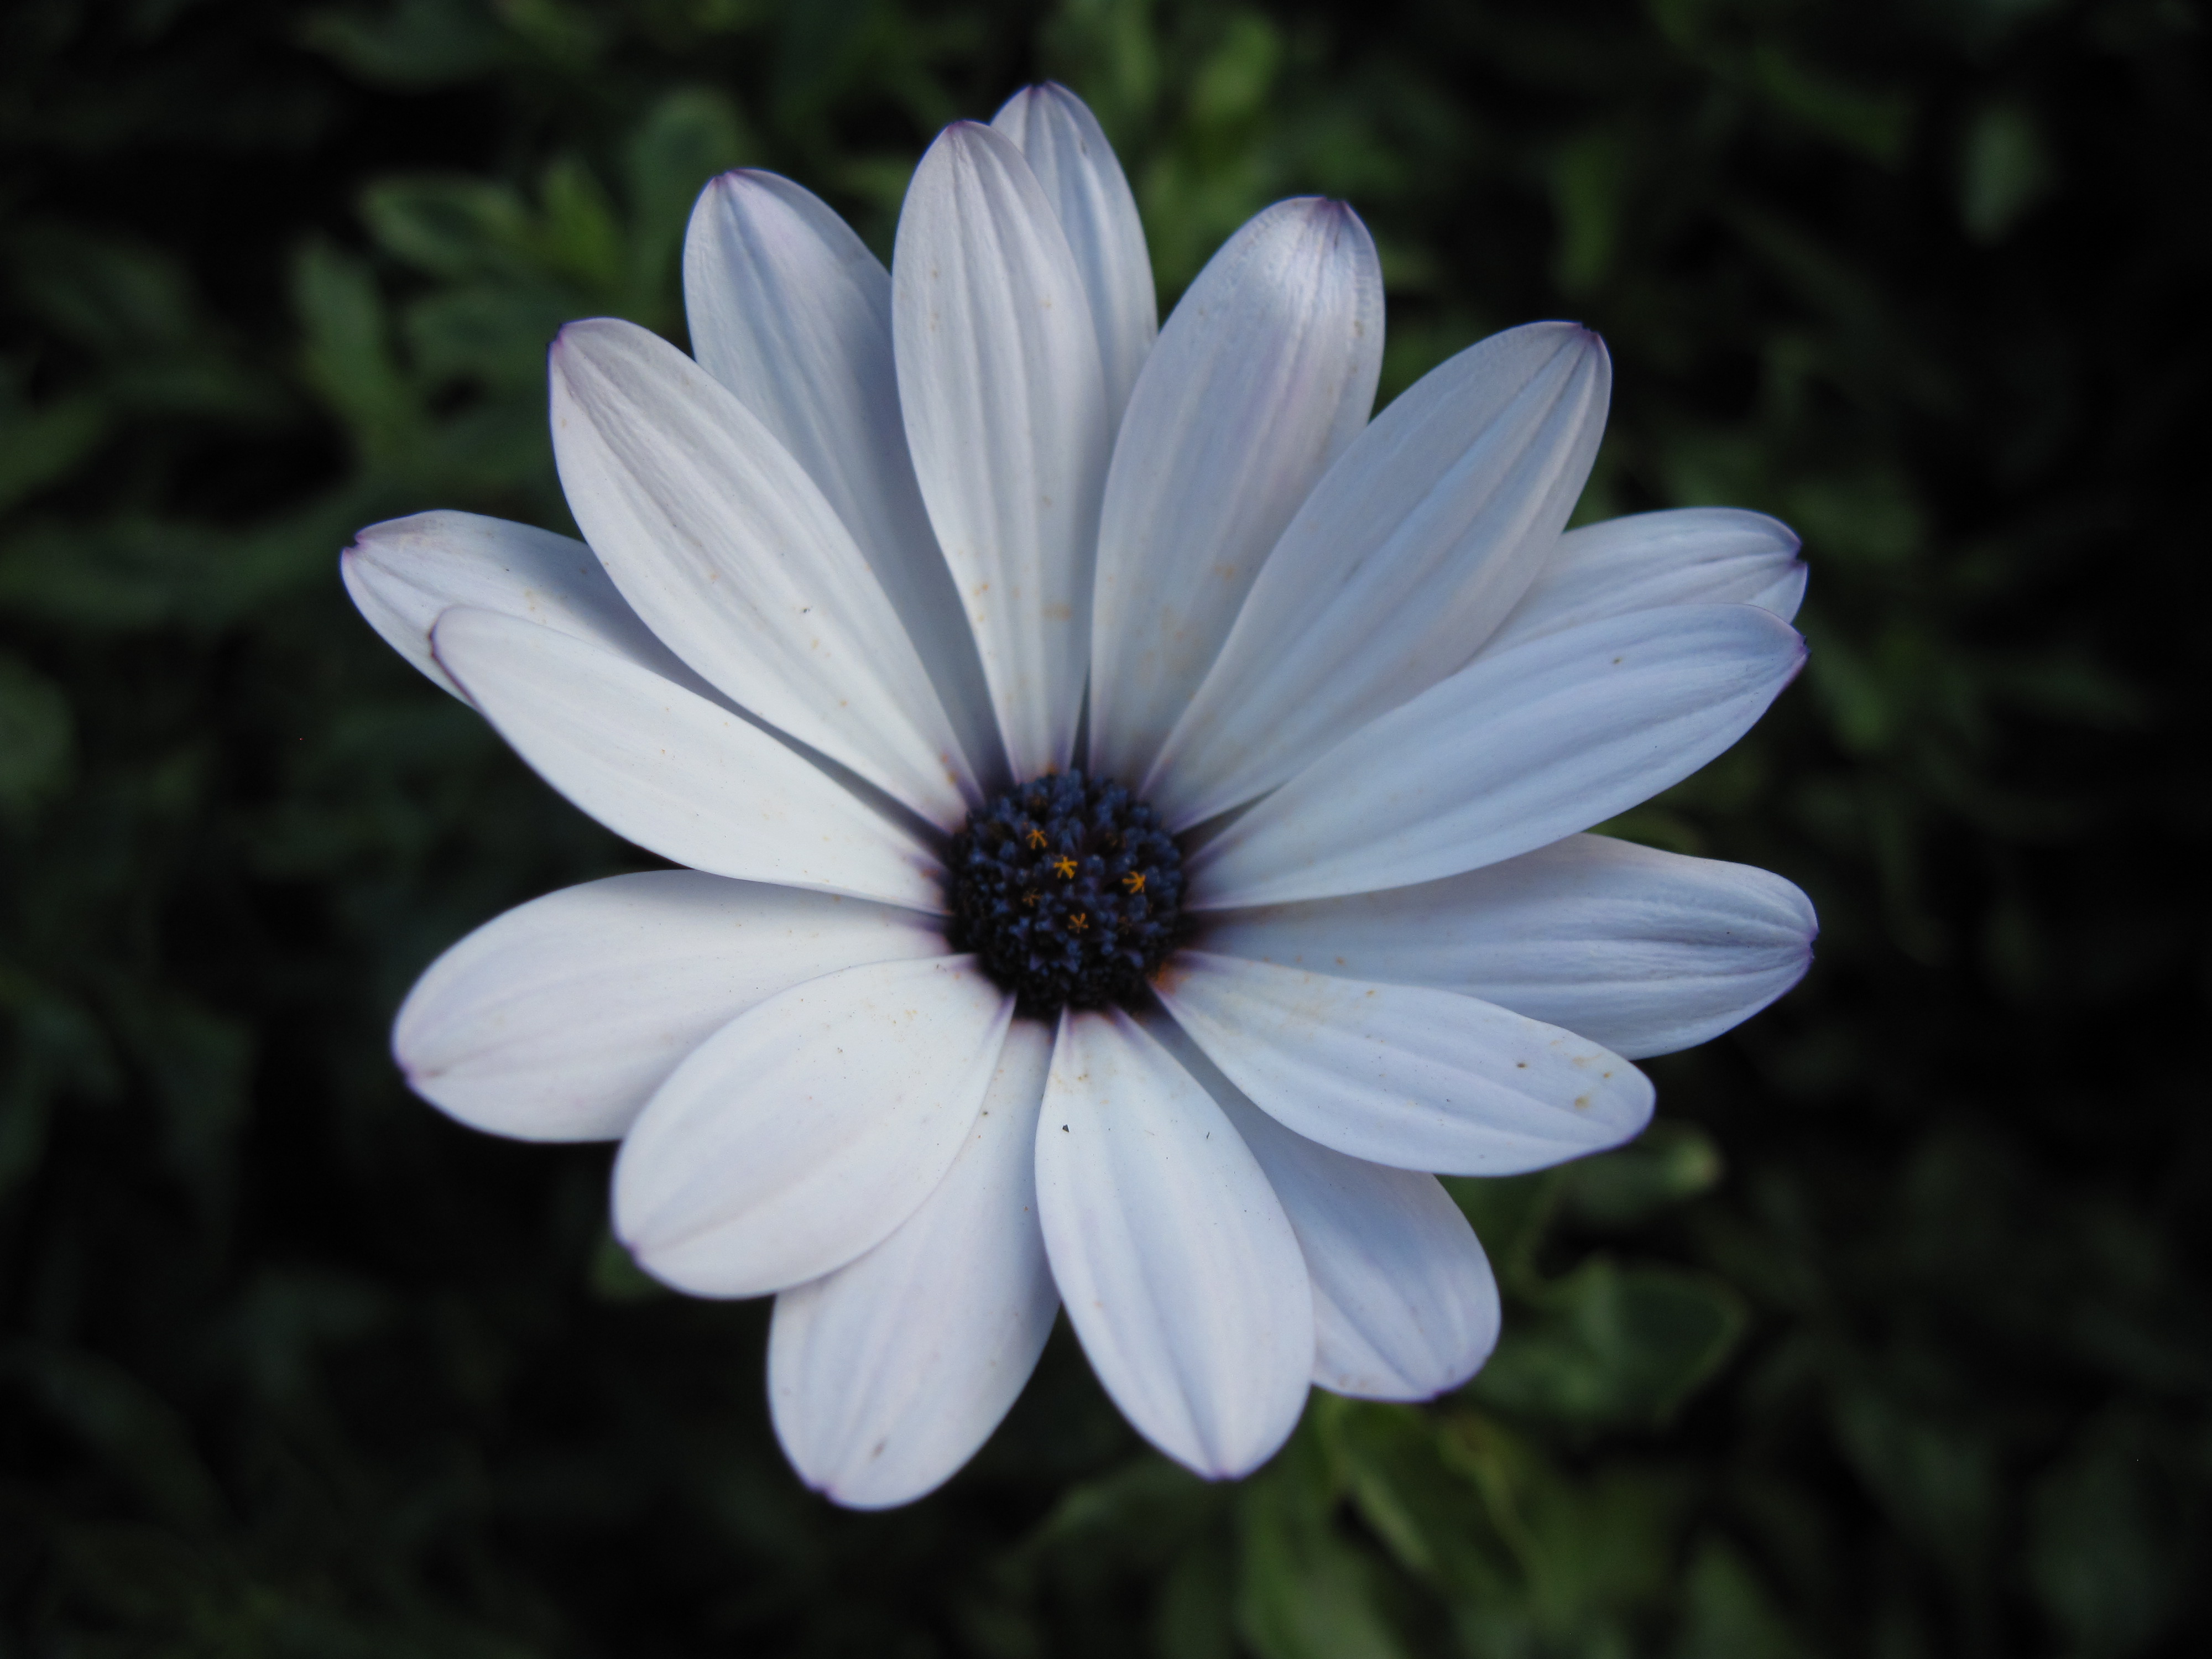 Free photo: White close-up flower - Beauty, Blossom, Close-up - Free ...